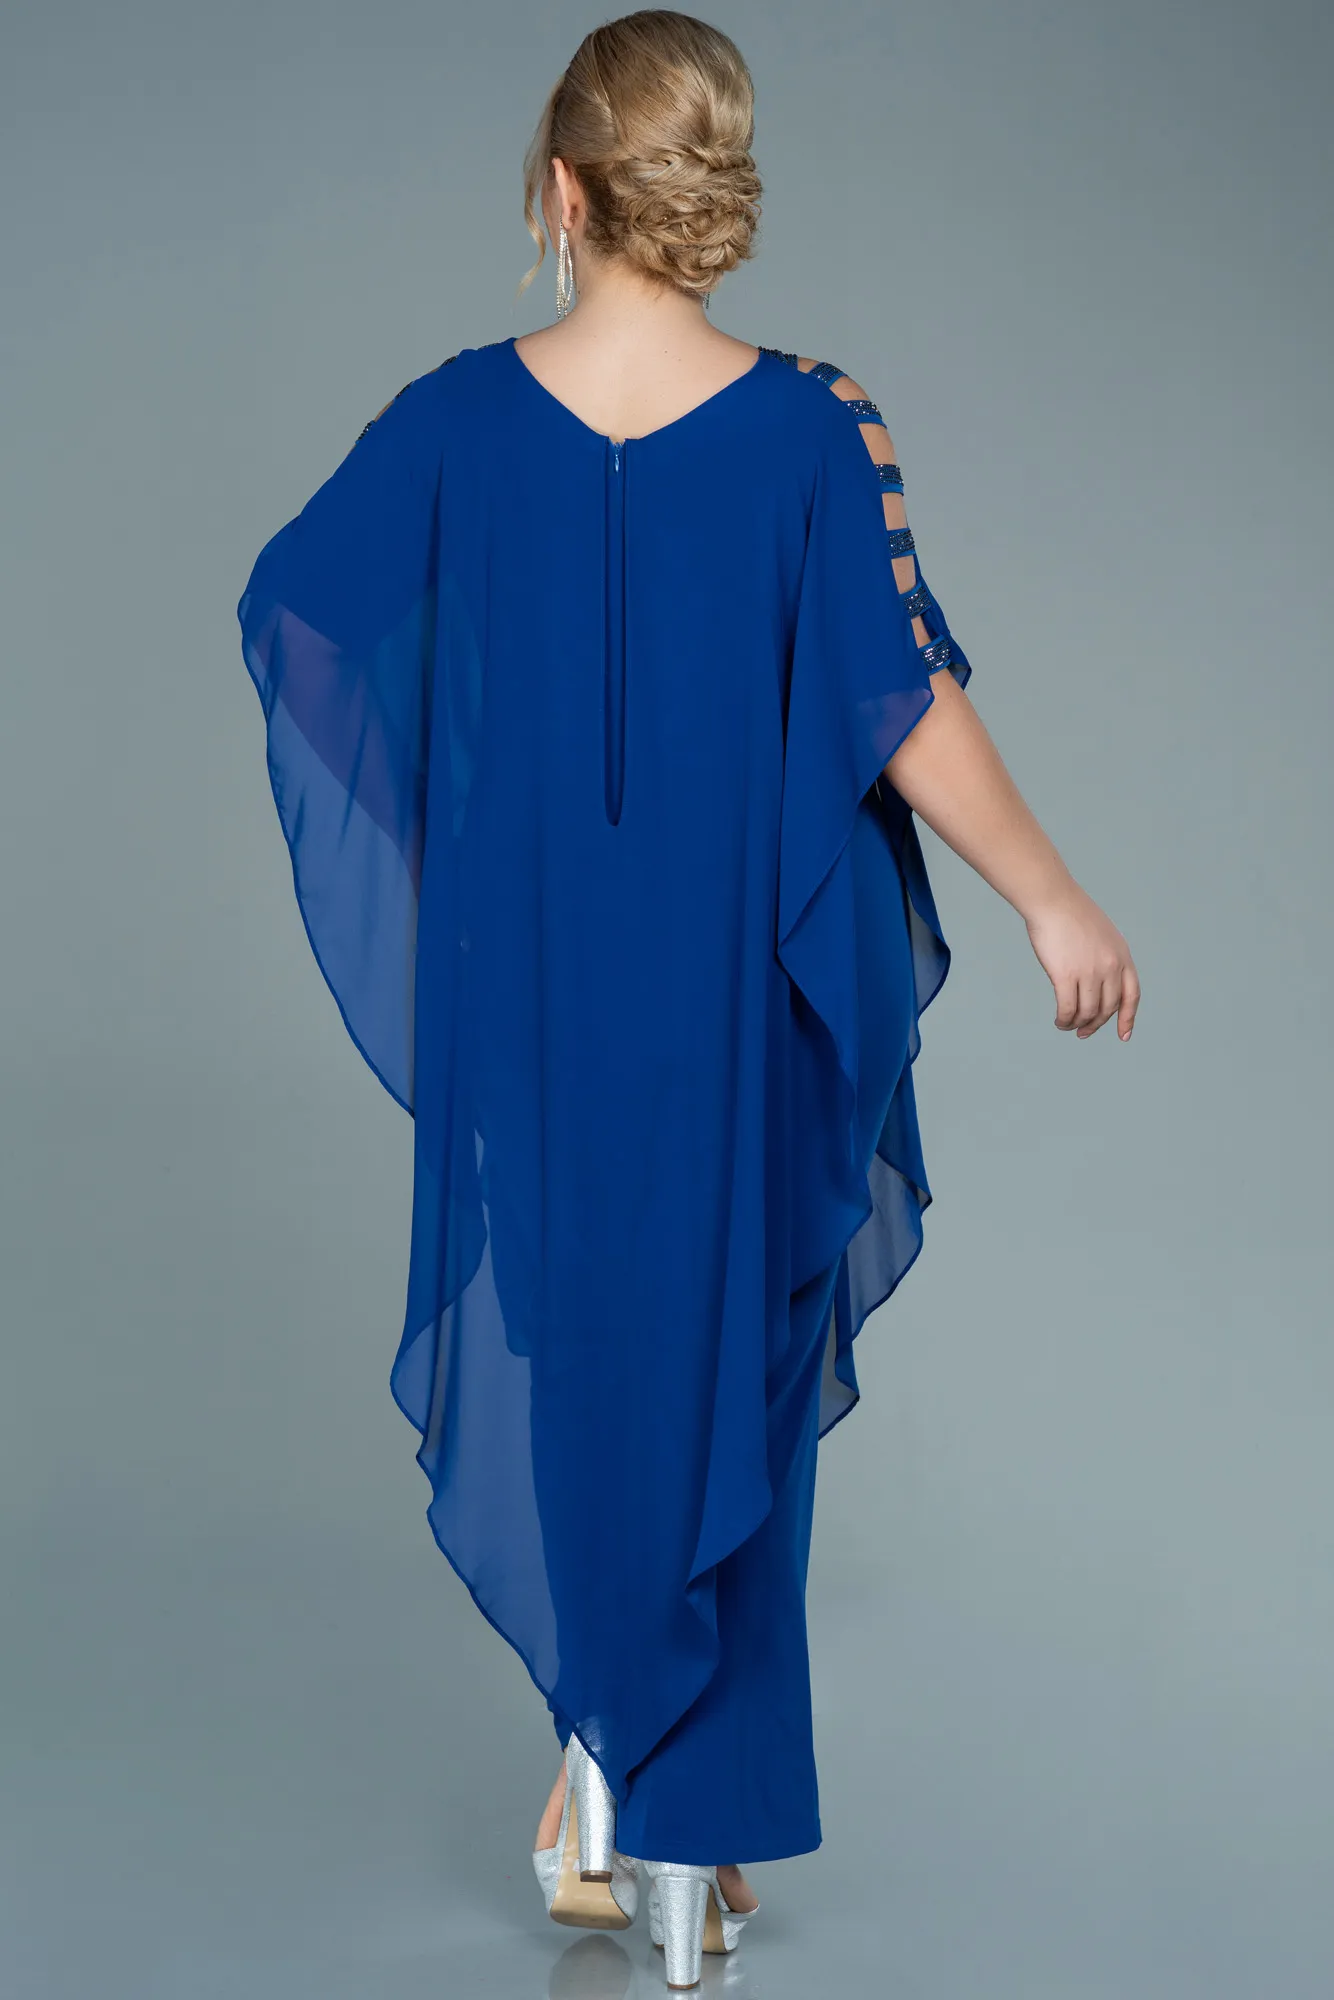 Sax Blue-Chiffon Plus Size Evening Dress ABT080